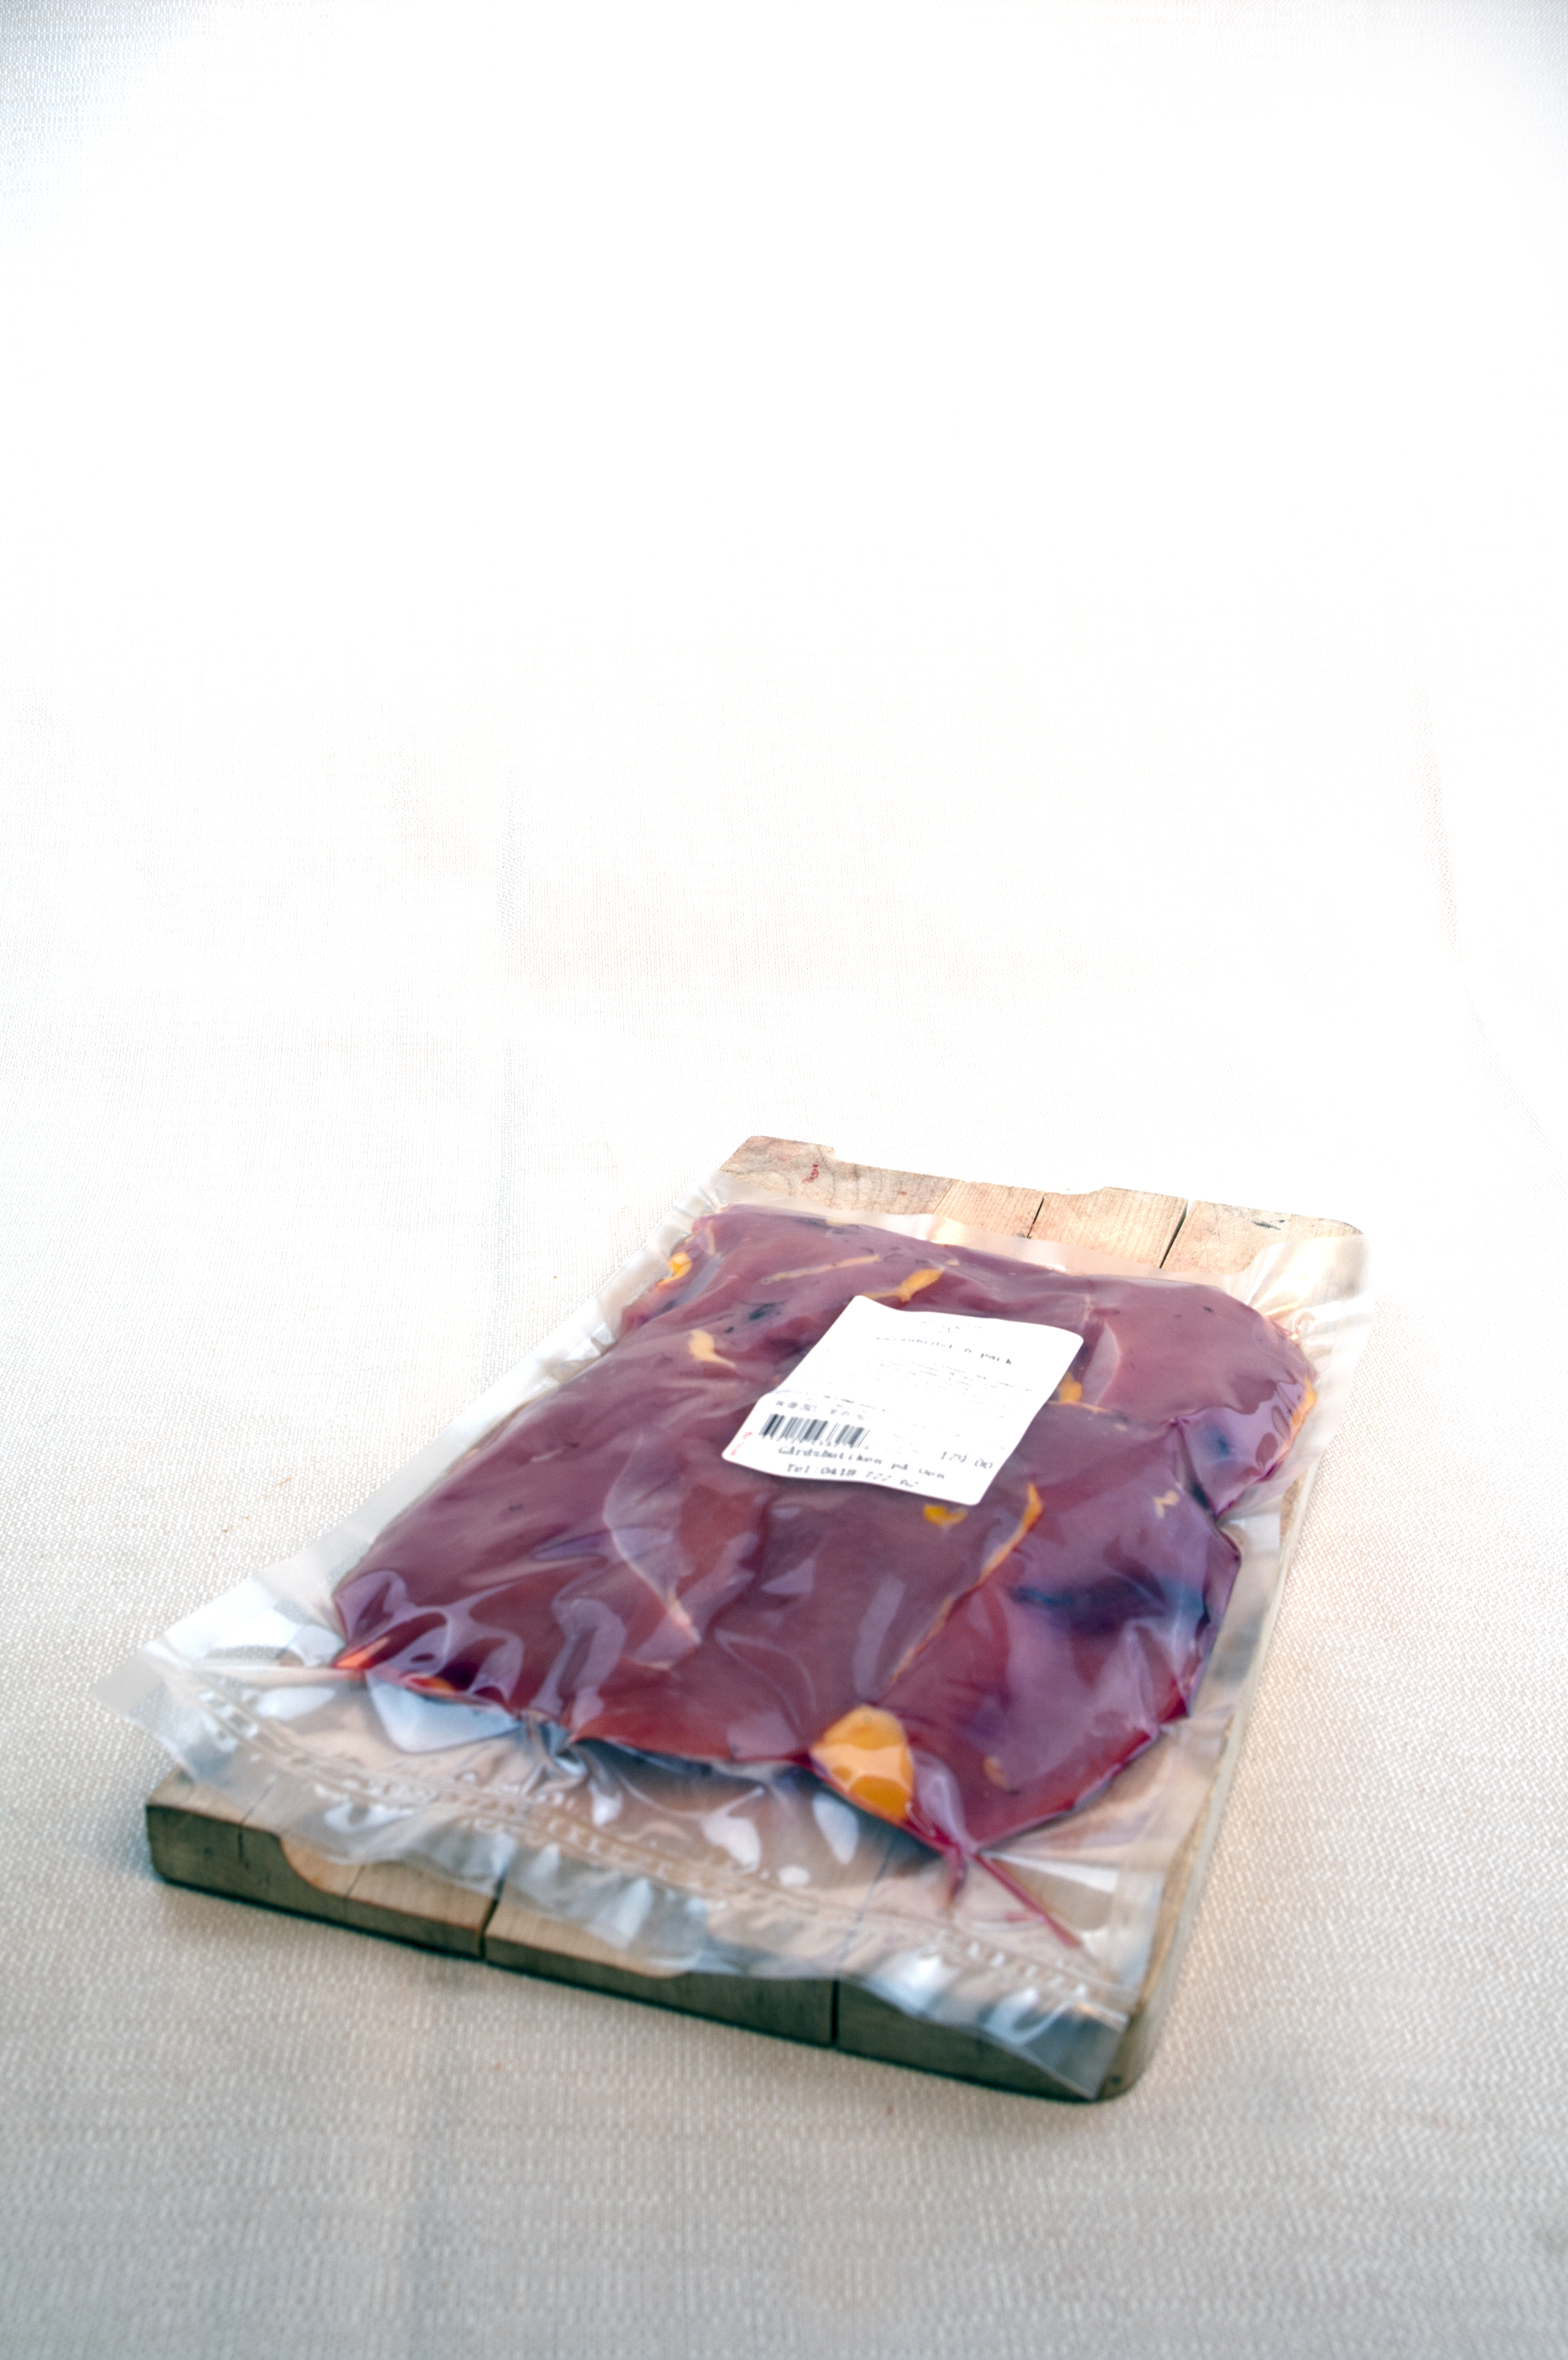 Fasanbröstfilé, 6pack, 600-800g (hagelfria)